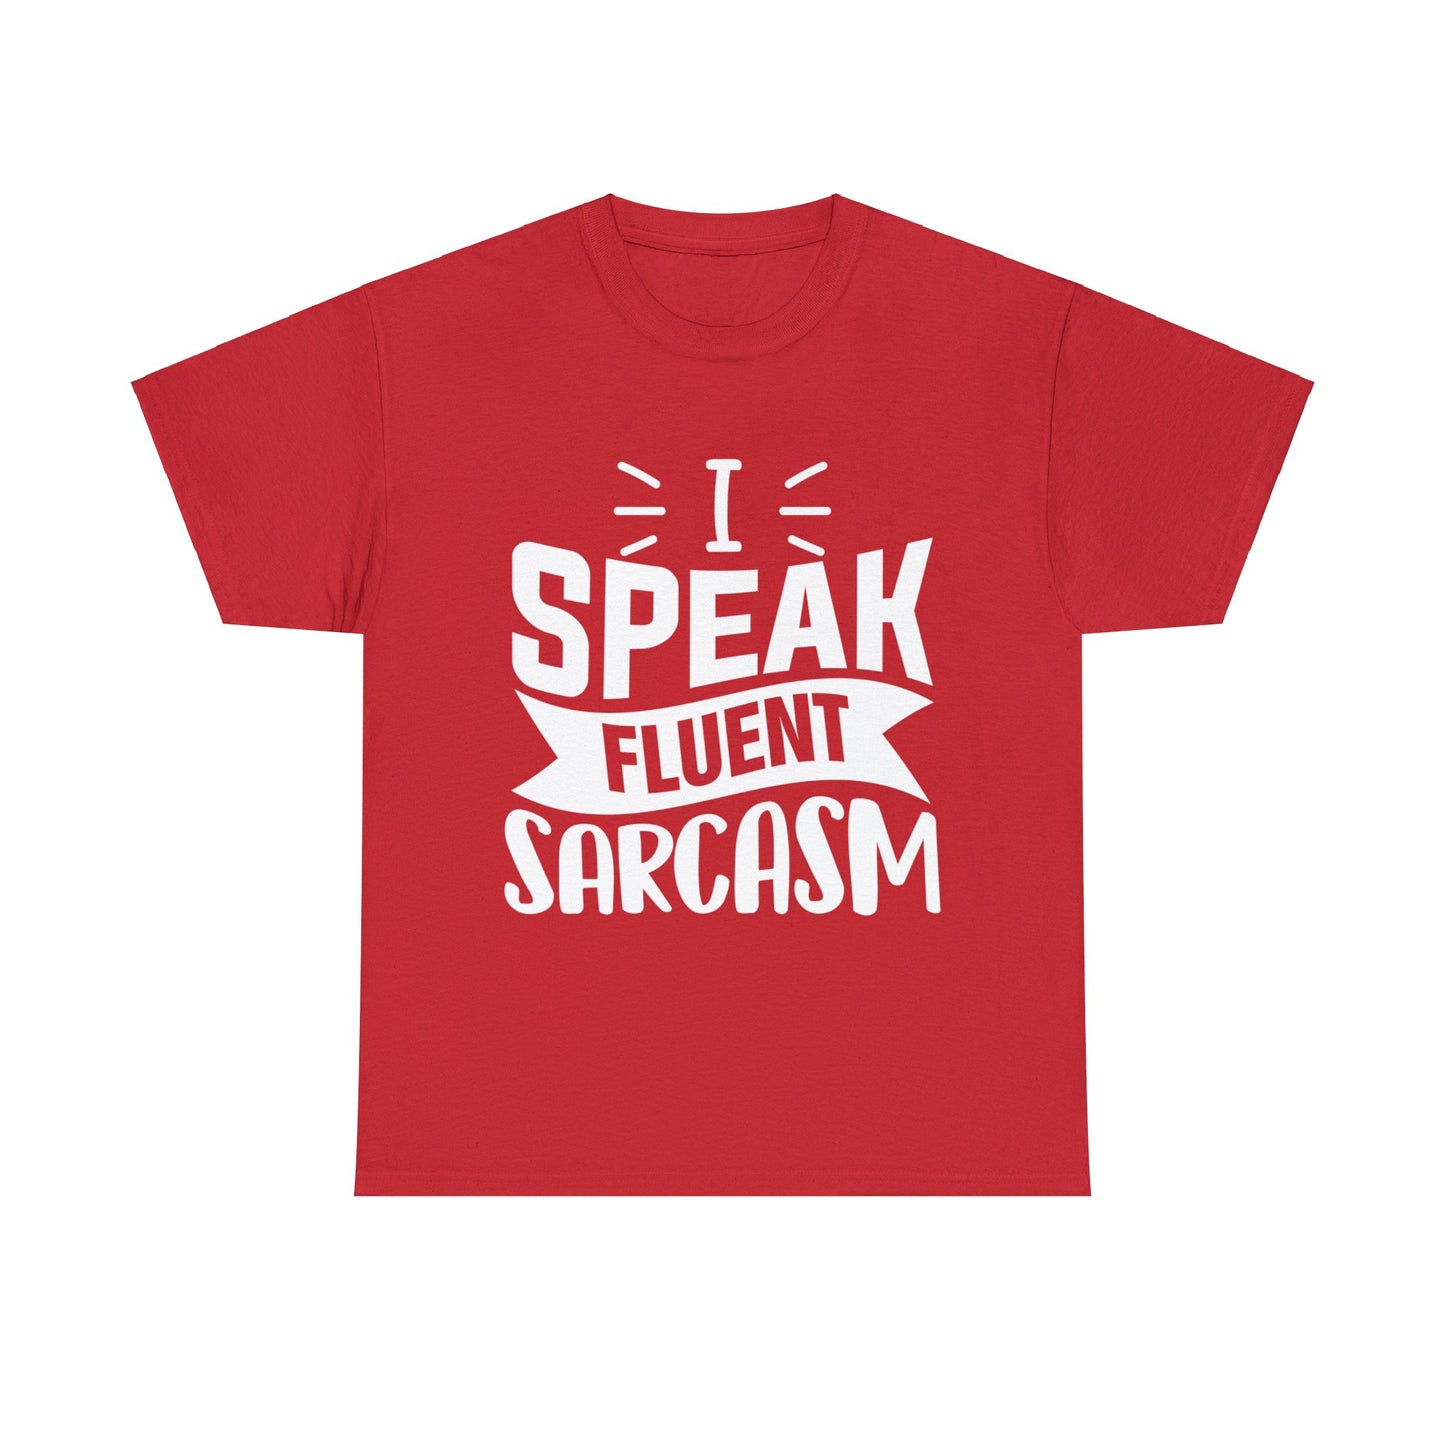 "I Speak Sarcasm" Cotton Tee